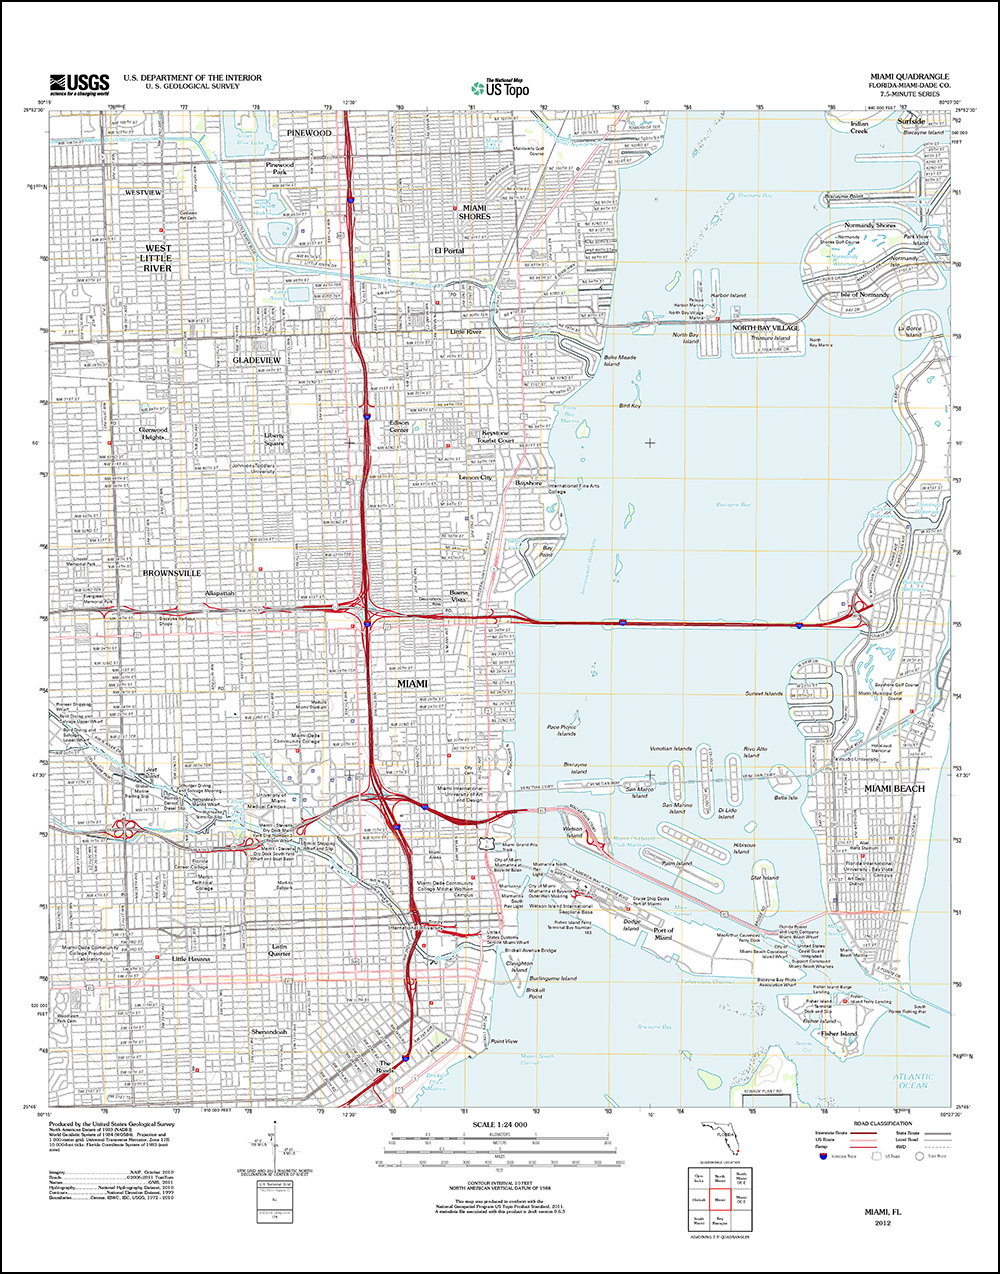 Browse image of the 2012 Miami, Florida 7.5 minute series quadrangle, US Topo (orthoimage layer layer off).